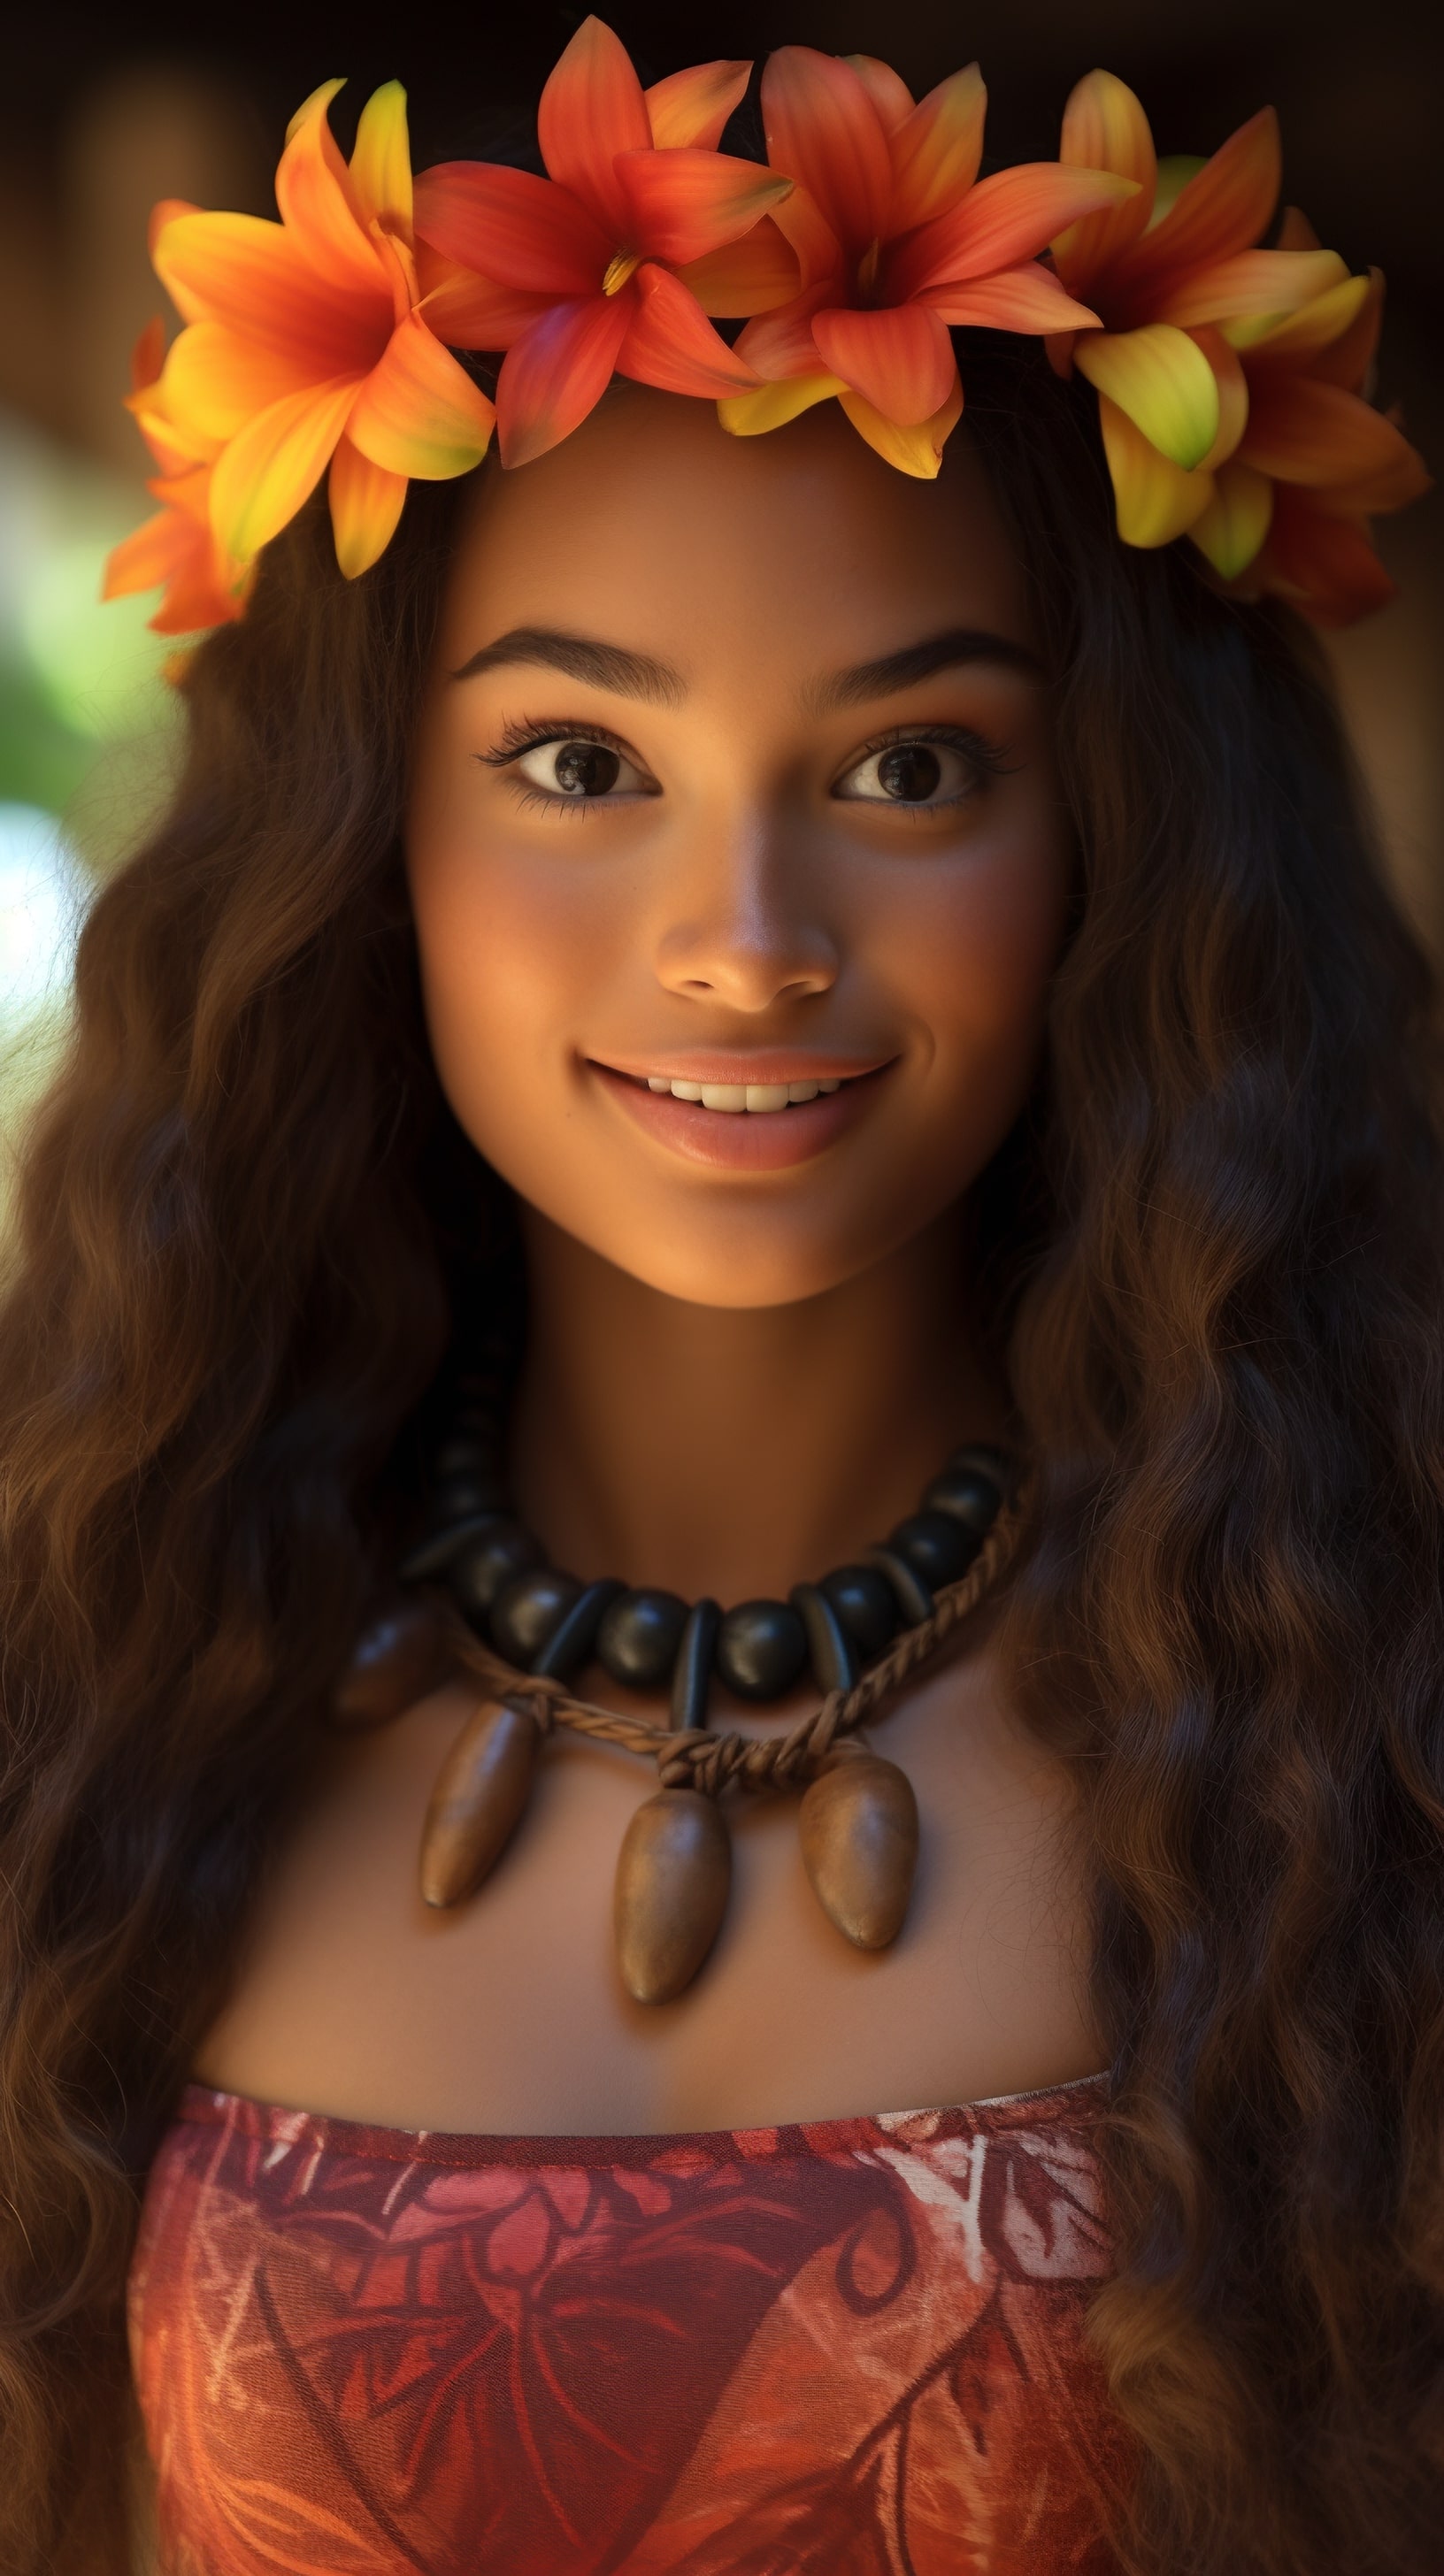 ИИ-фото Моаны с цветочным венком на голове